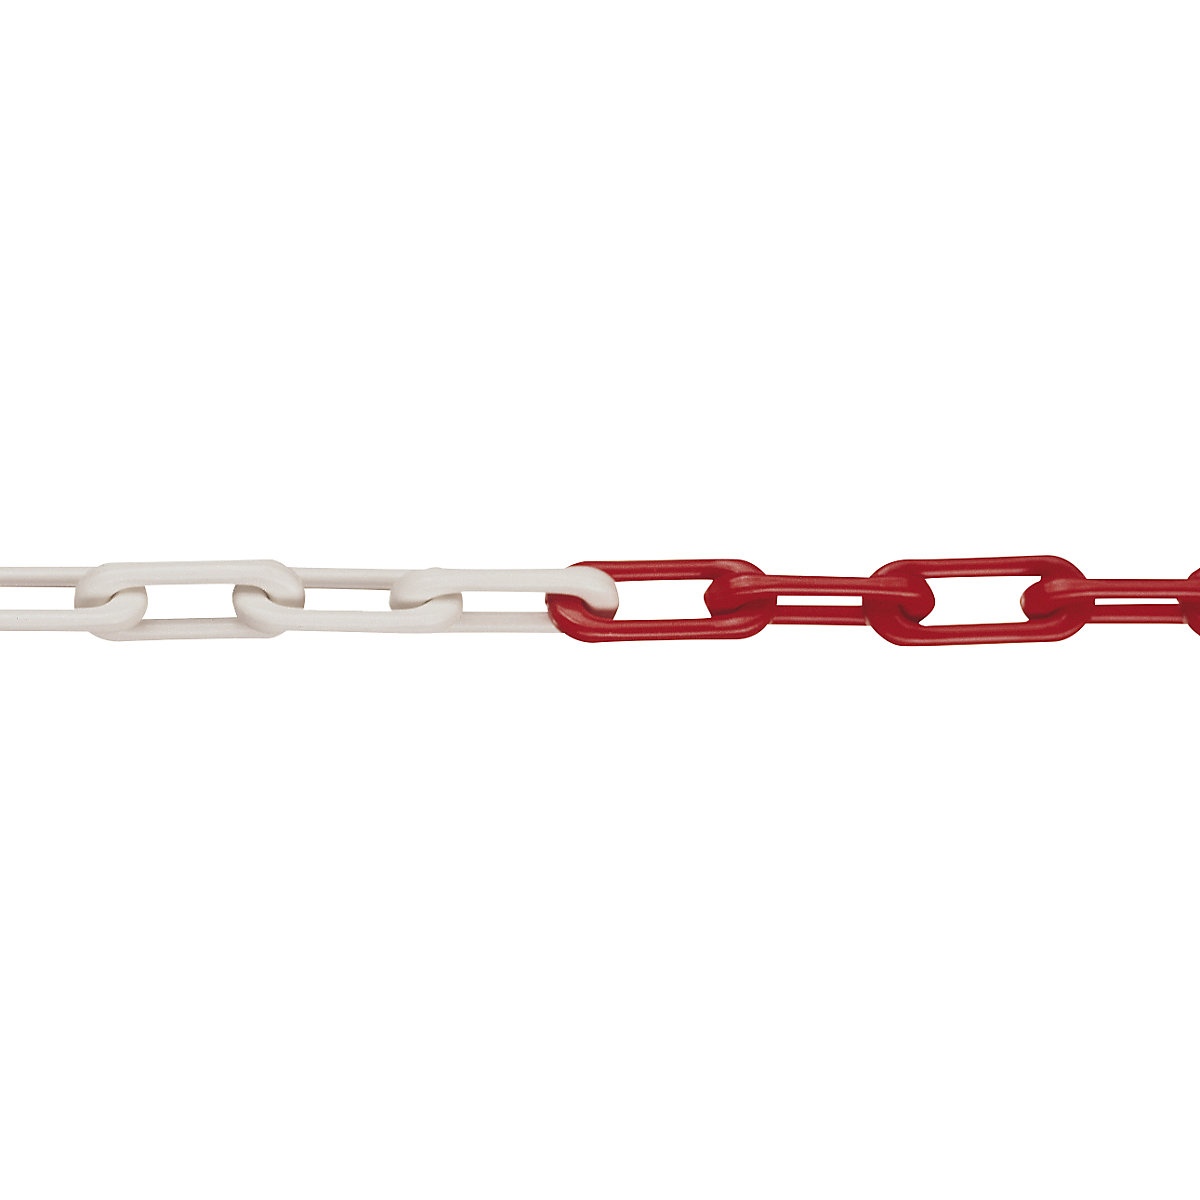 Nylon-kwaliteitsketting, MNK-kwaliteit 6, lengte 50 m, rood/wit-4